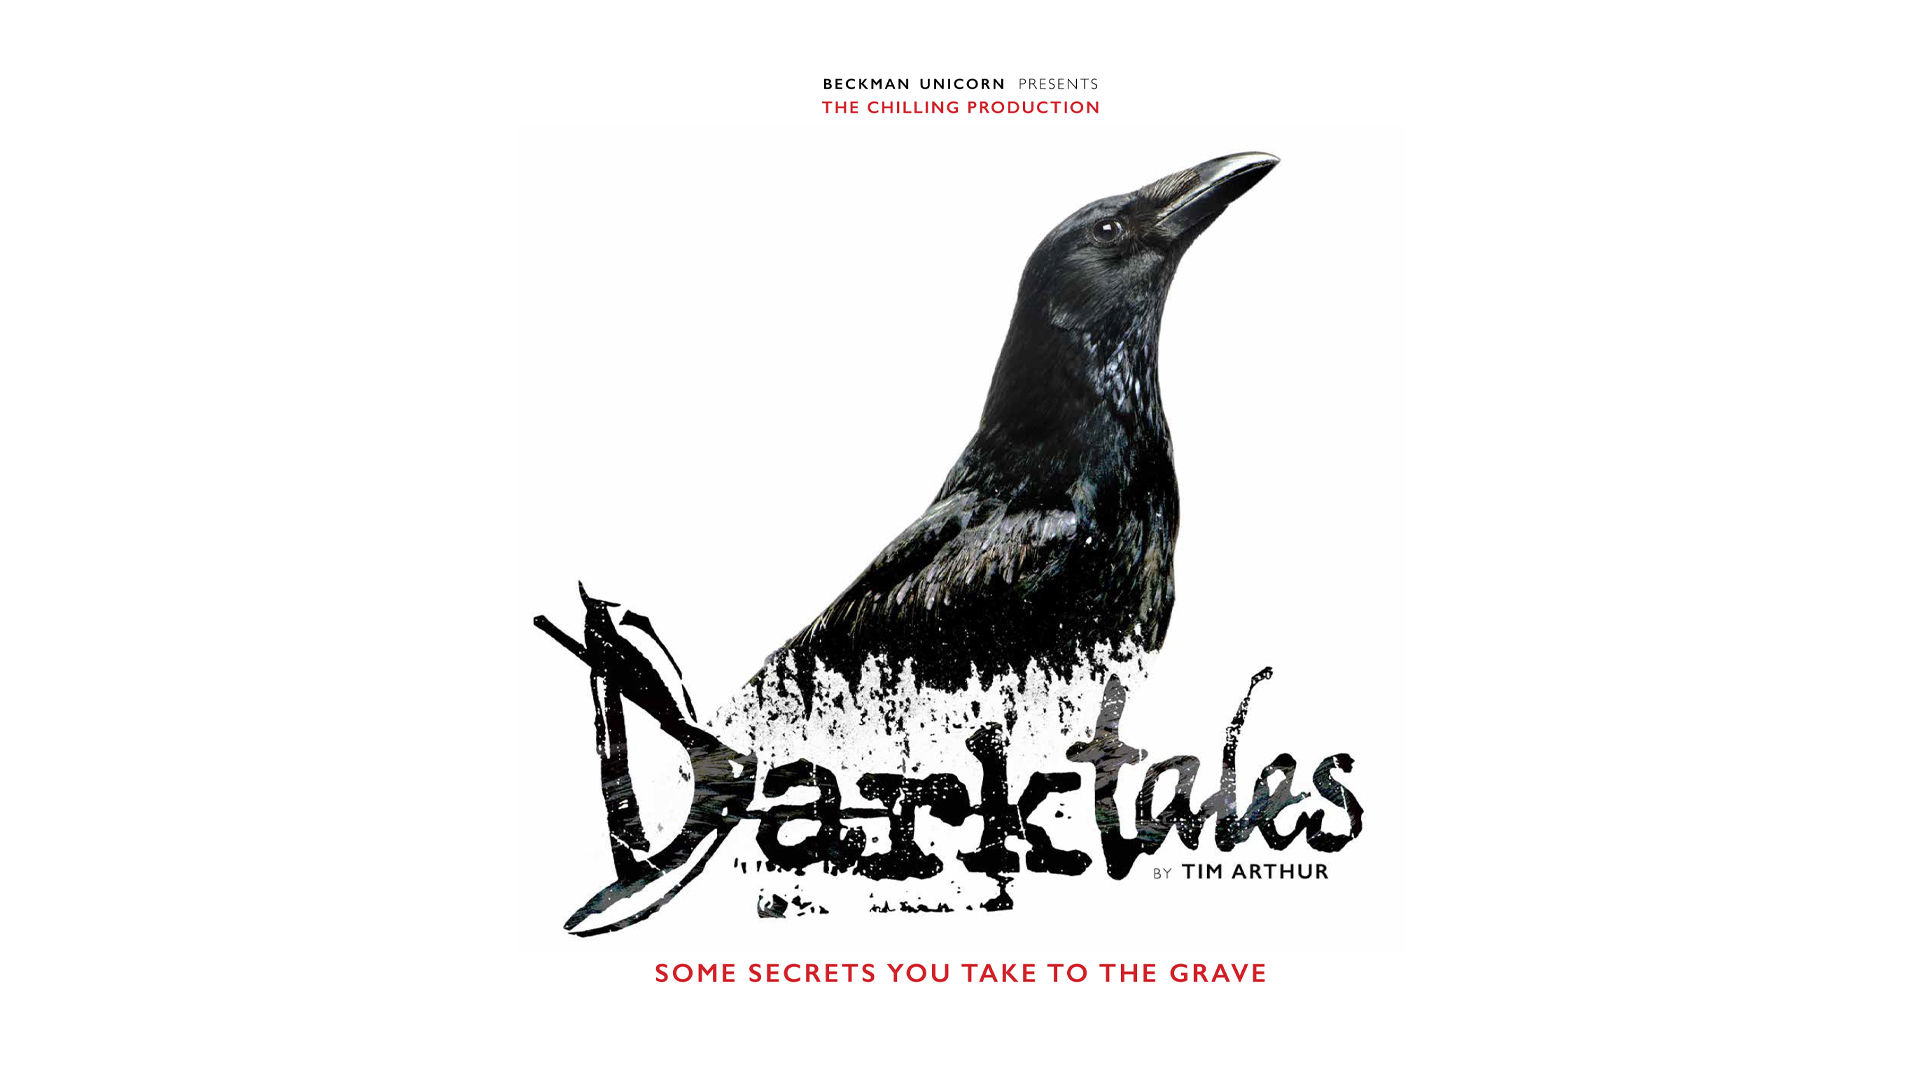 Darktales - Tim Arthur - Beckman Unicorn